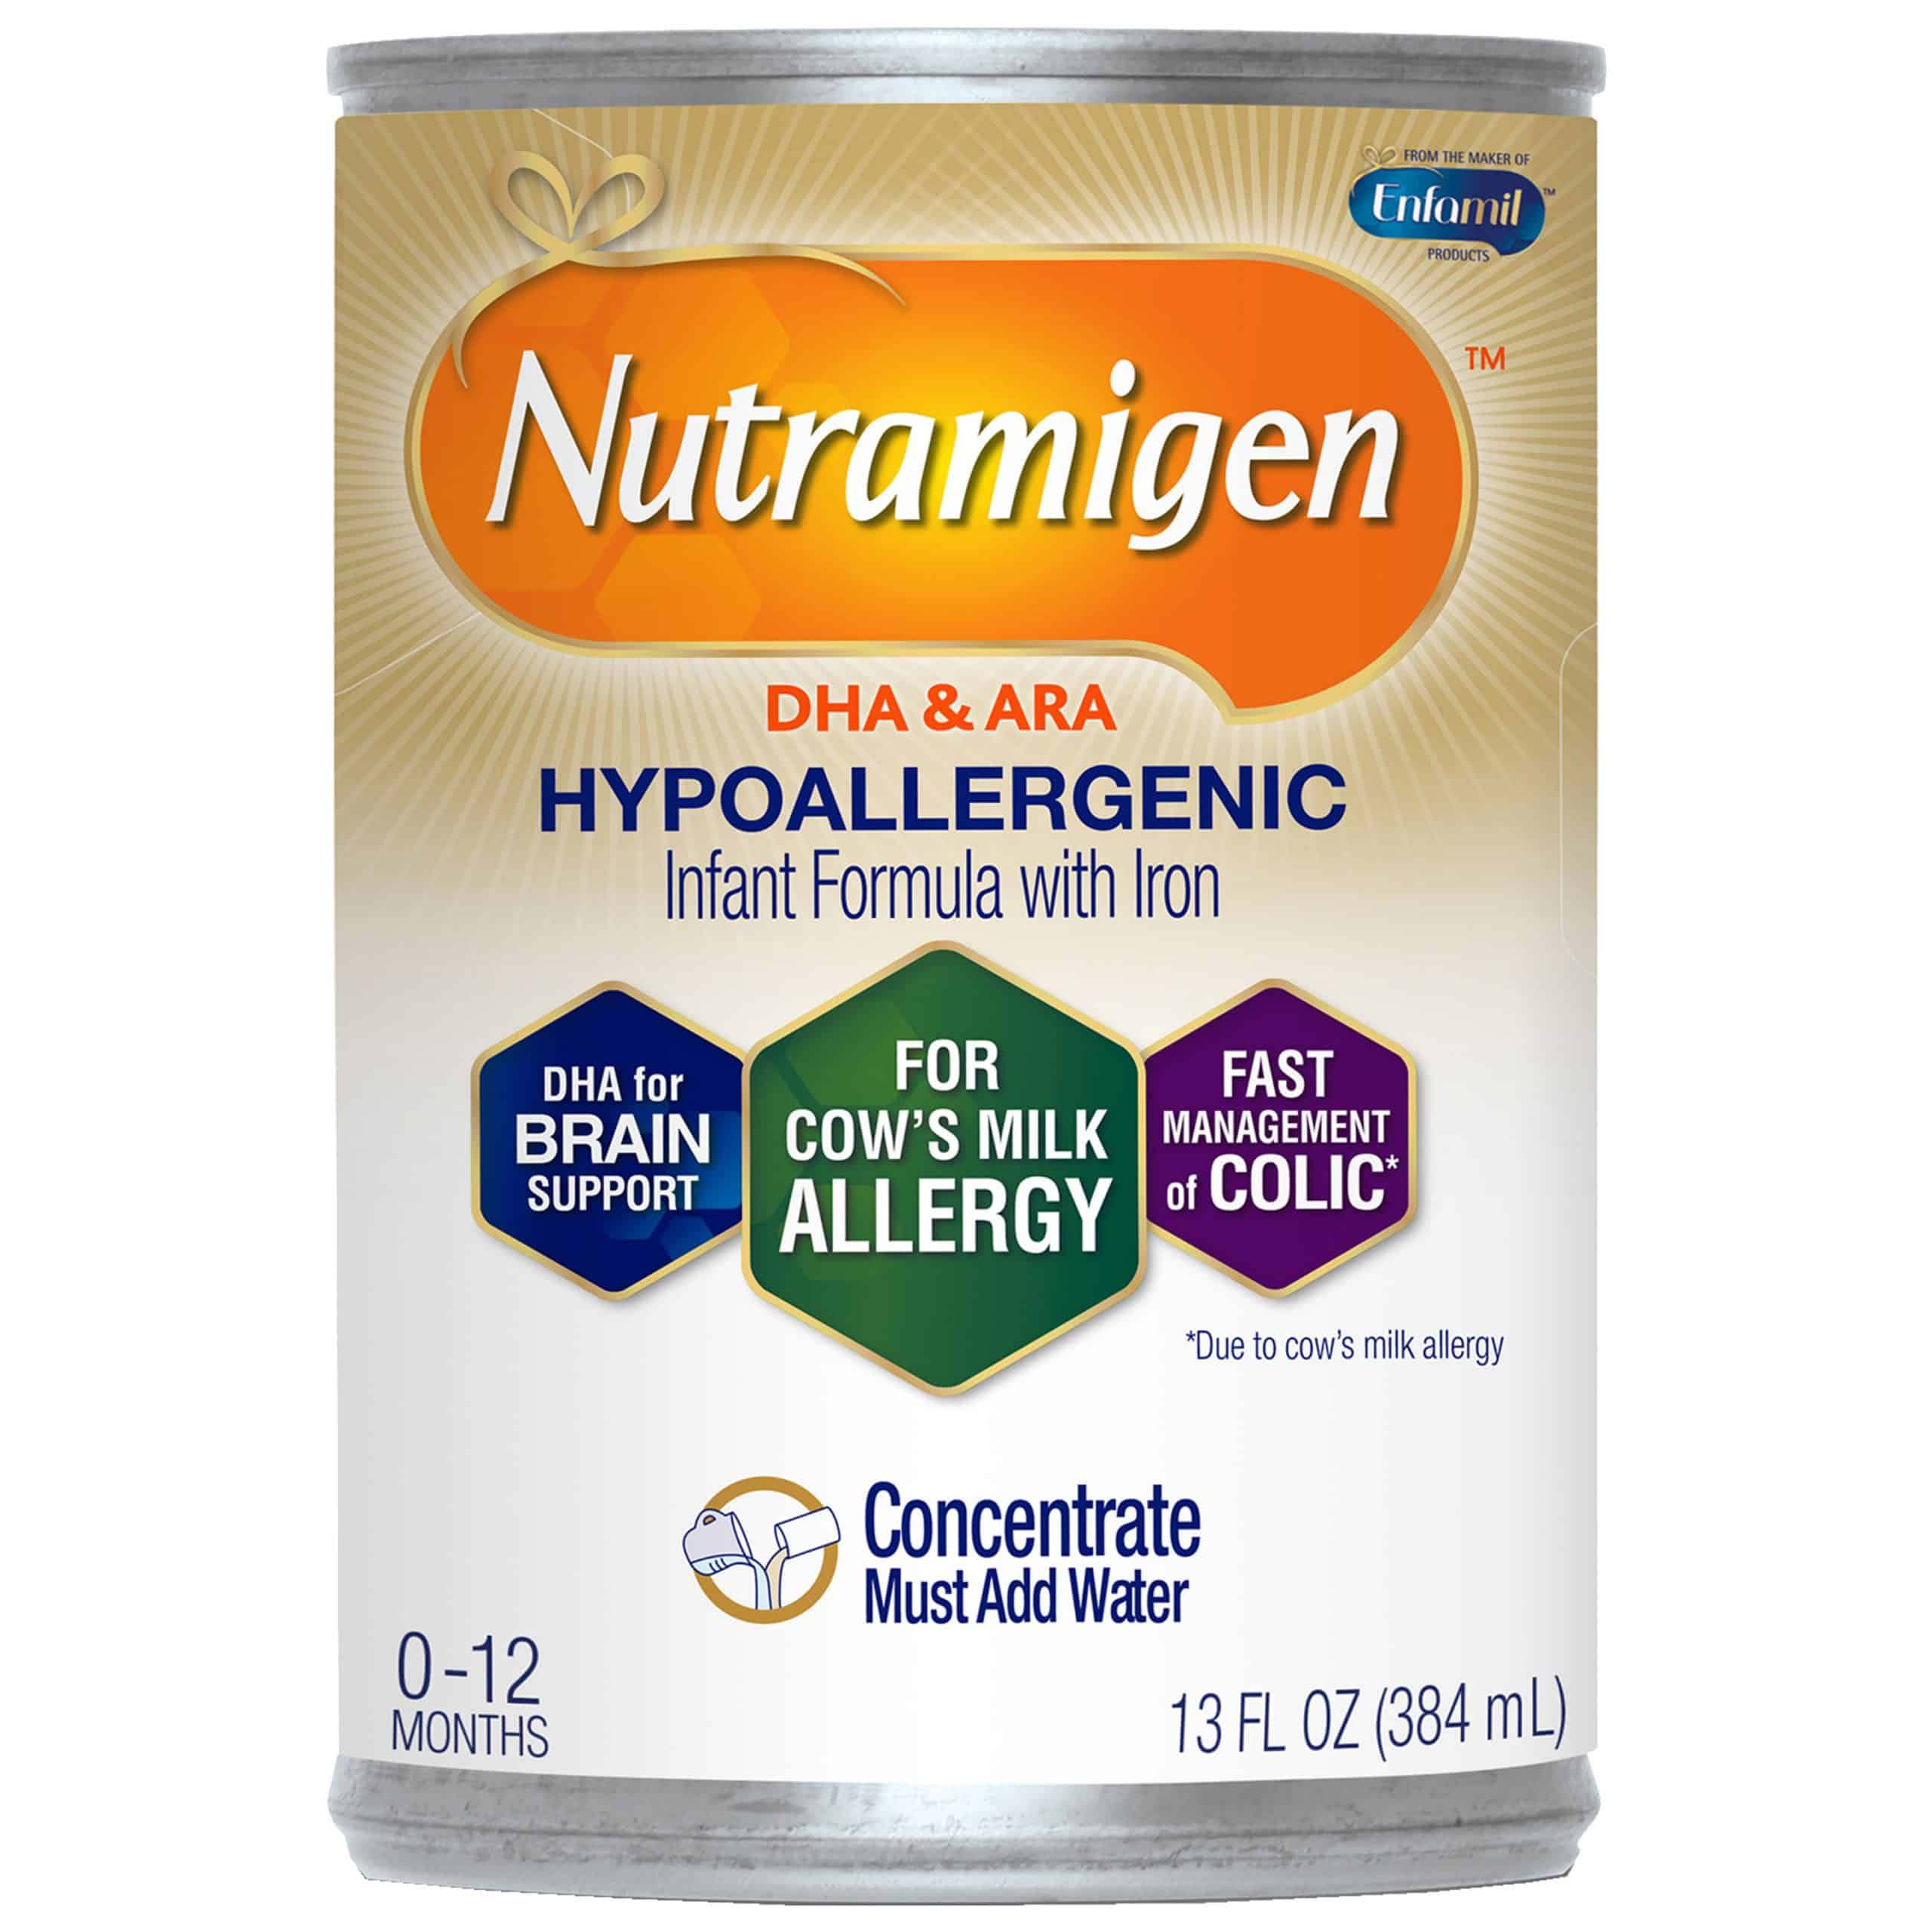 Nutramigen Hypoallergenic Infant Formula for Cow